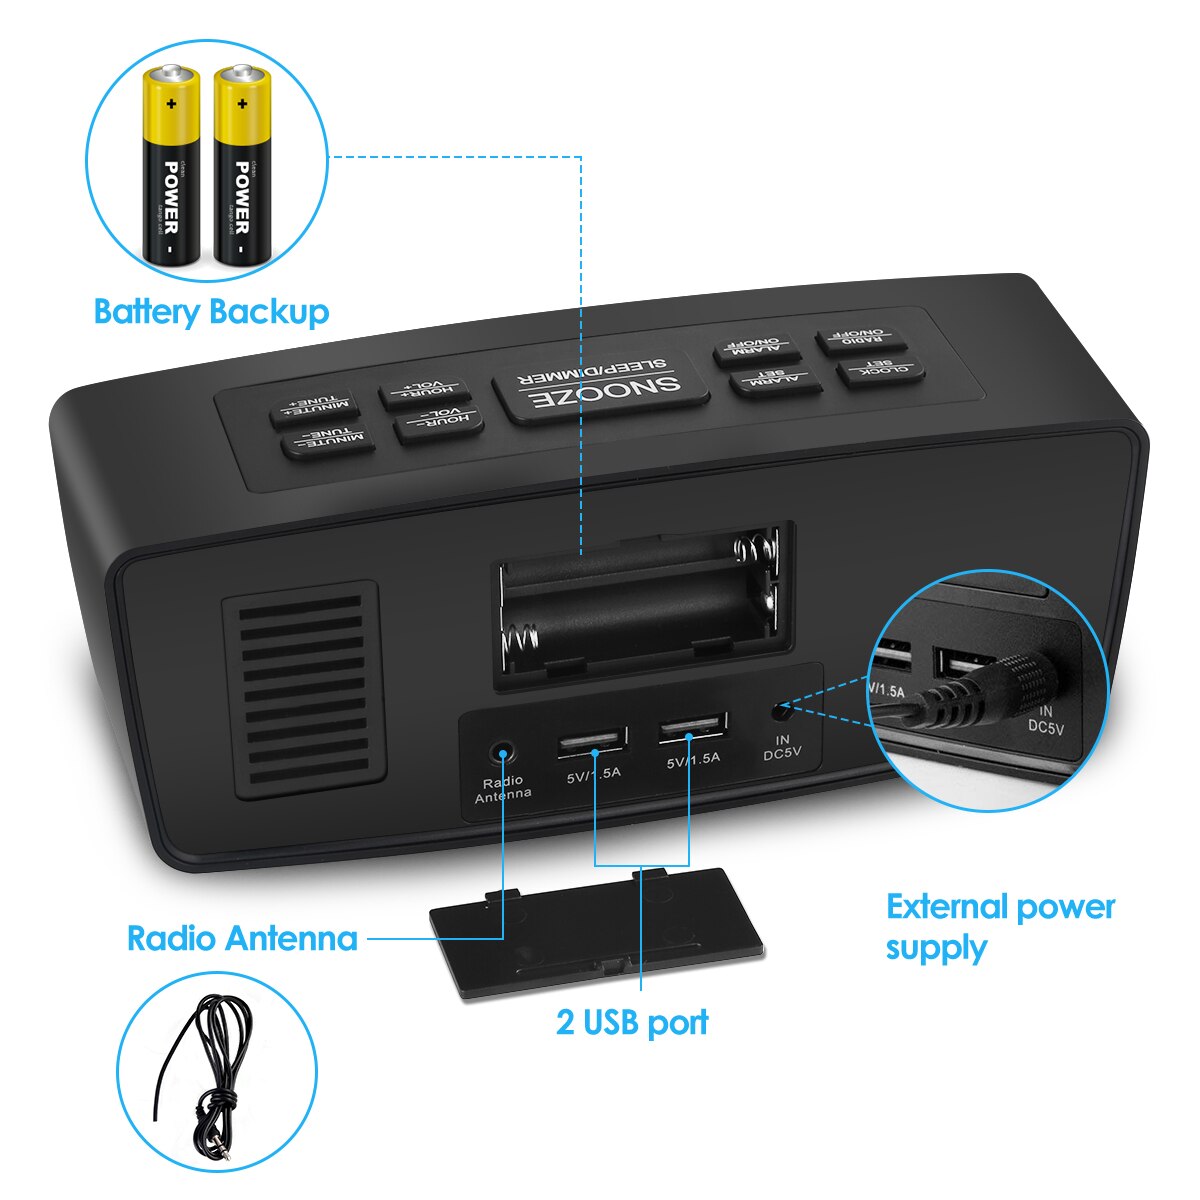 FM Alarm Radio Dimmable LED Display Clock Radio Battery Backup With USB Charging Port, Sleep Timer & Snooze Mode